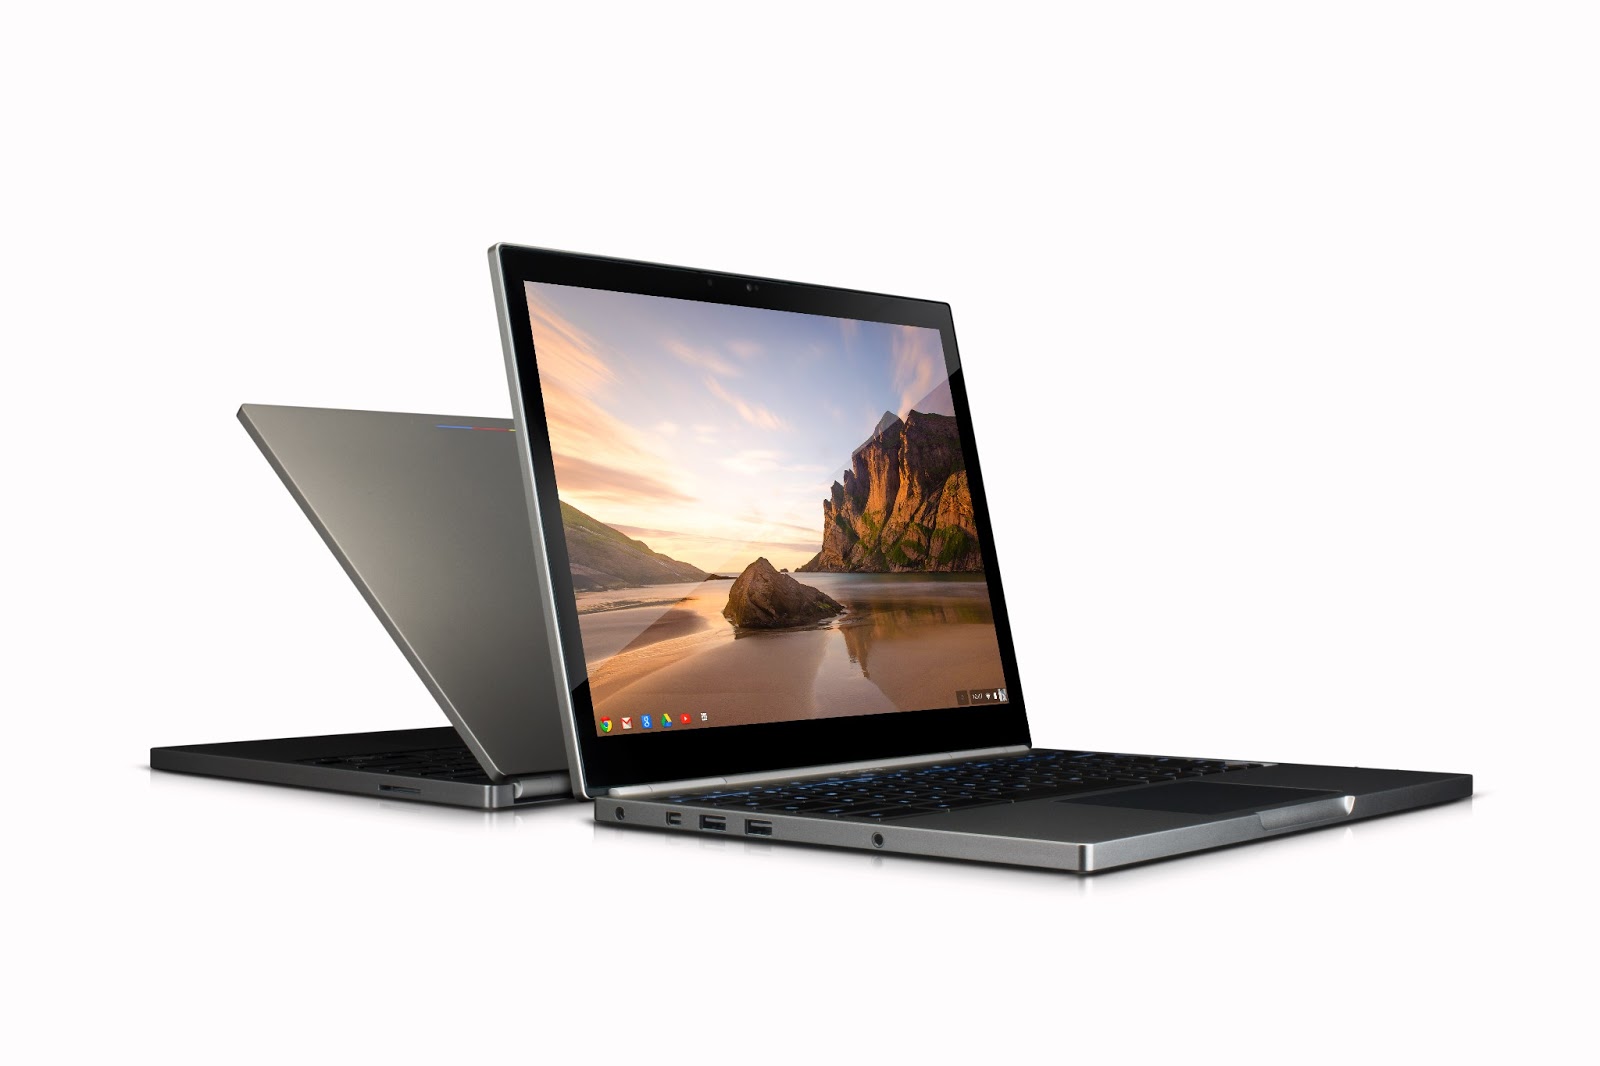 Google announces high-end Chromebook Pixel notebook PC